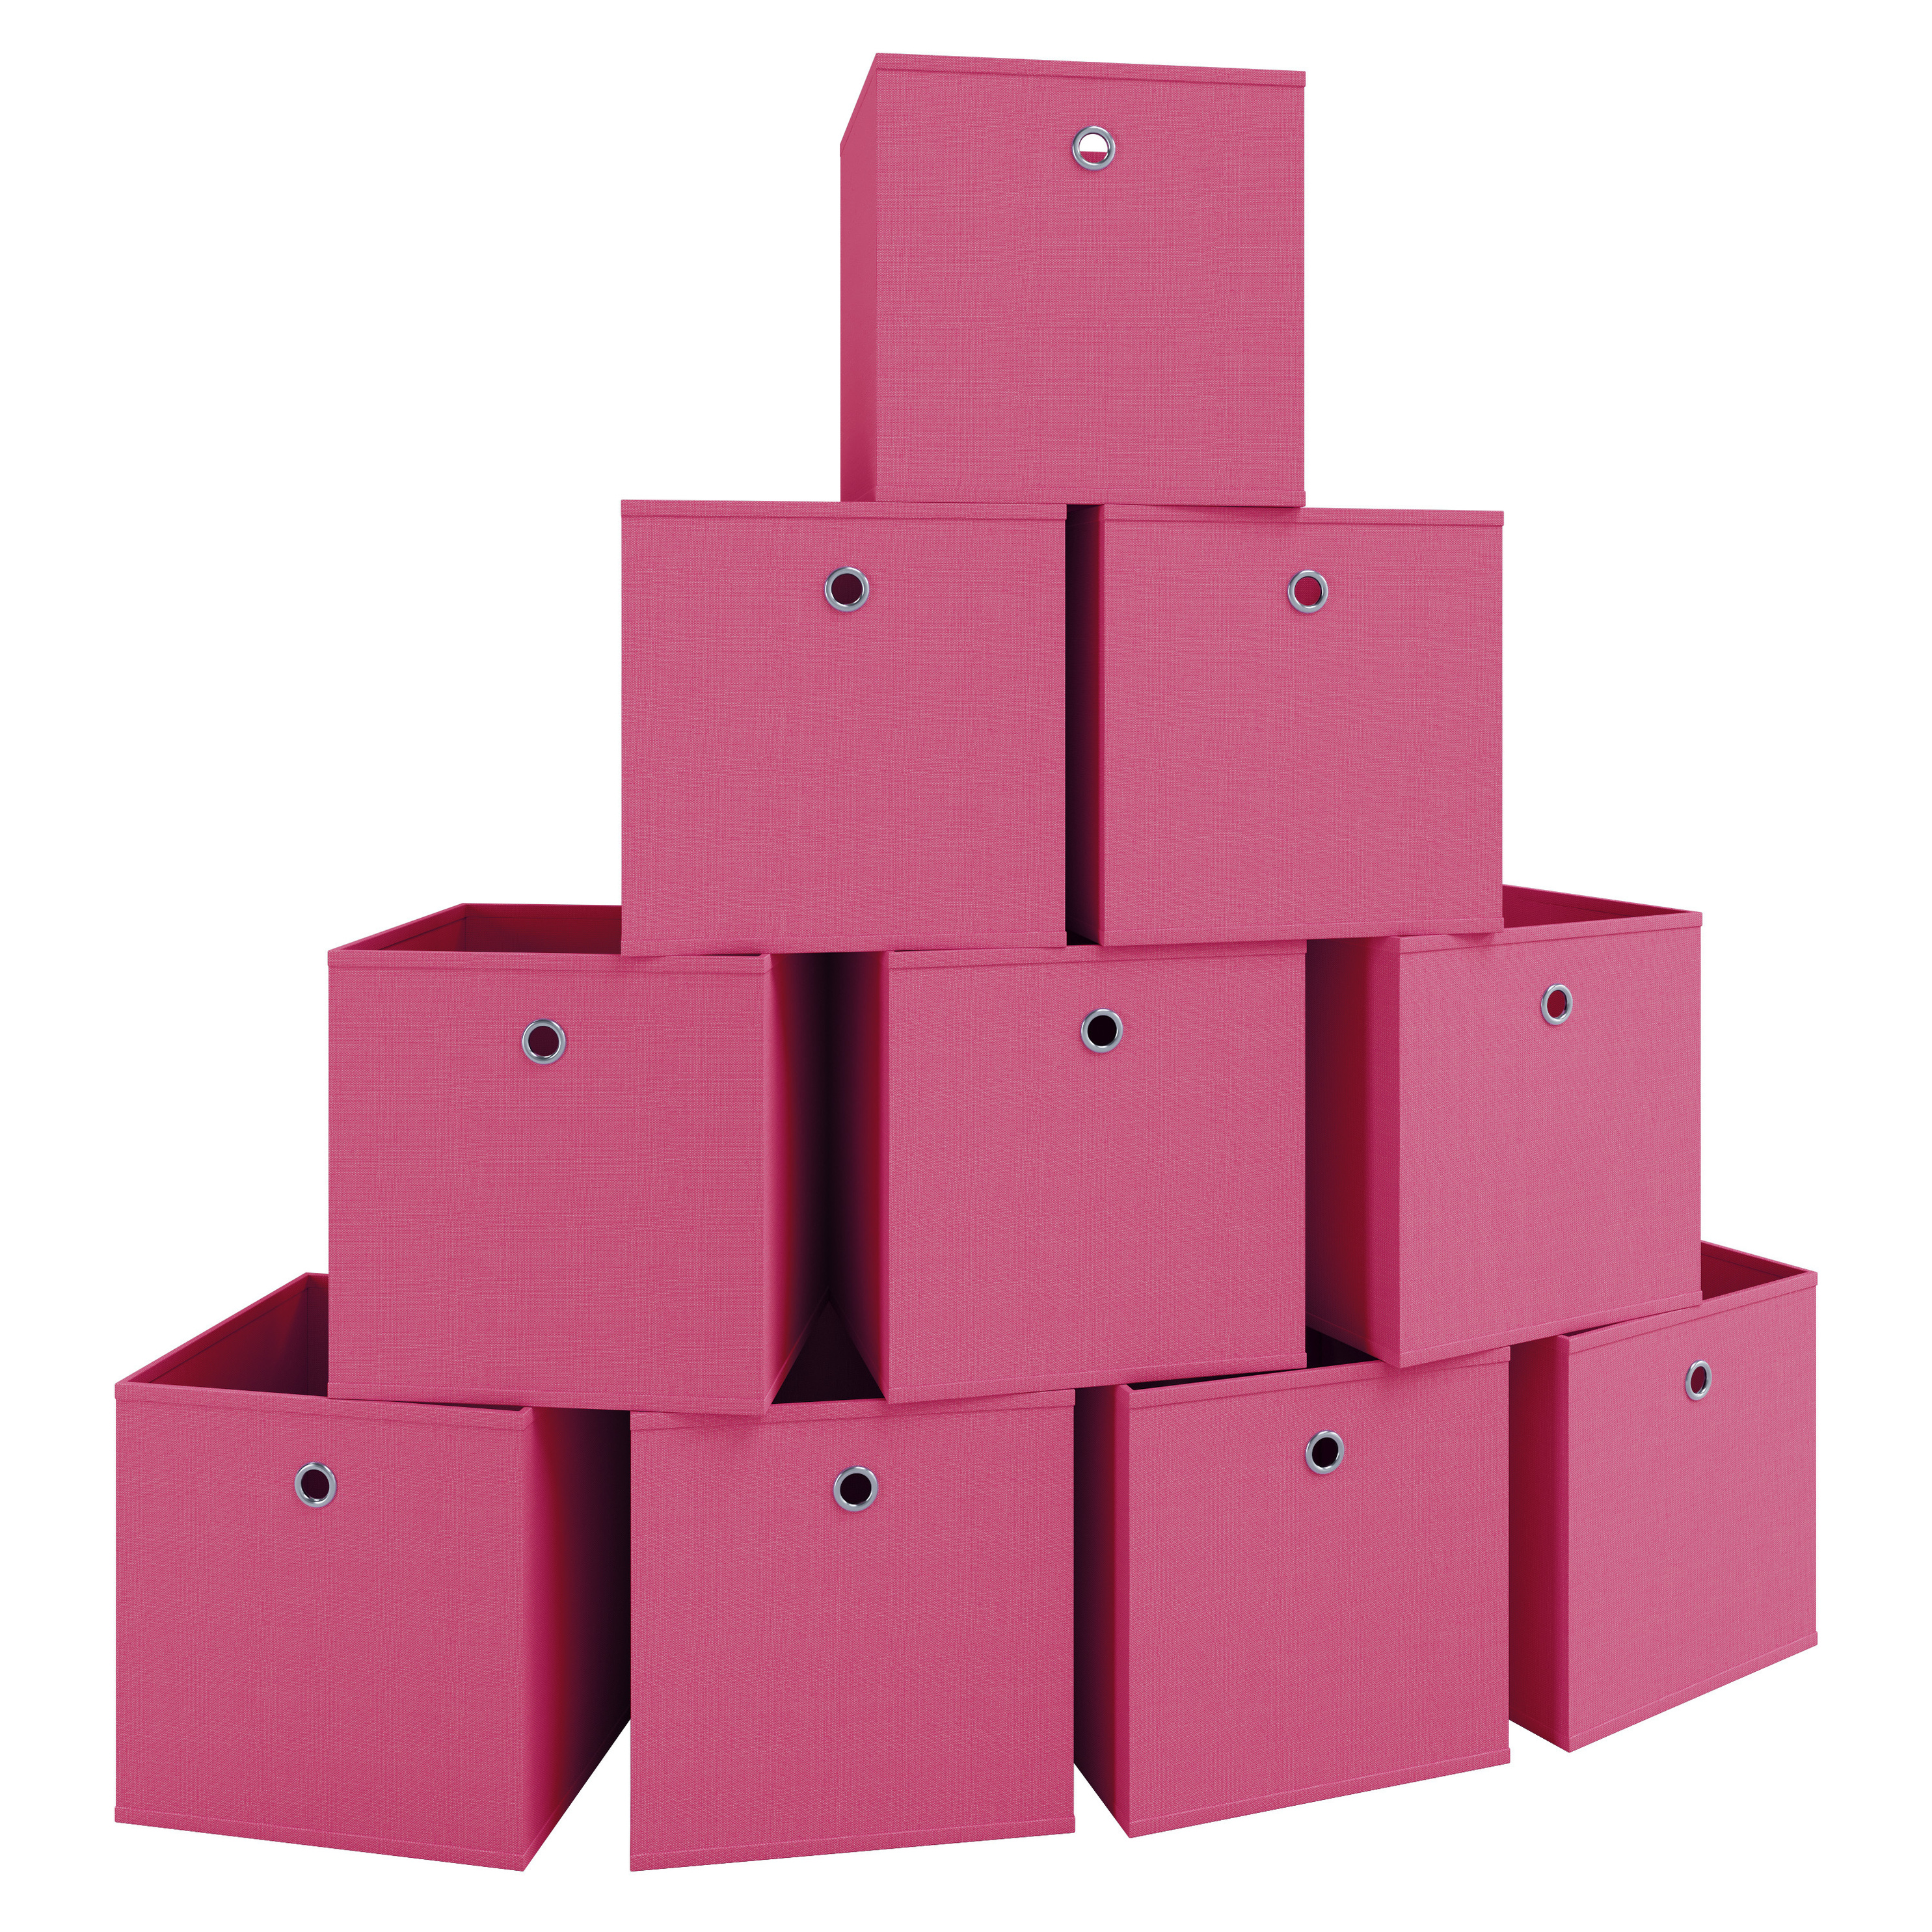 https://i.weltbild.de/p/vcm-10er-set-stoff-faltbox-klappbox-boxas-farbe-pink-334941223.jpg?v=1&wp=_max